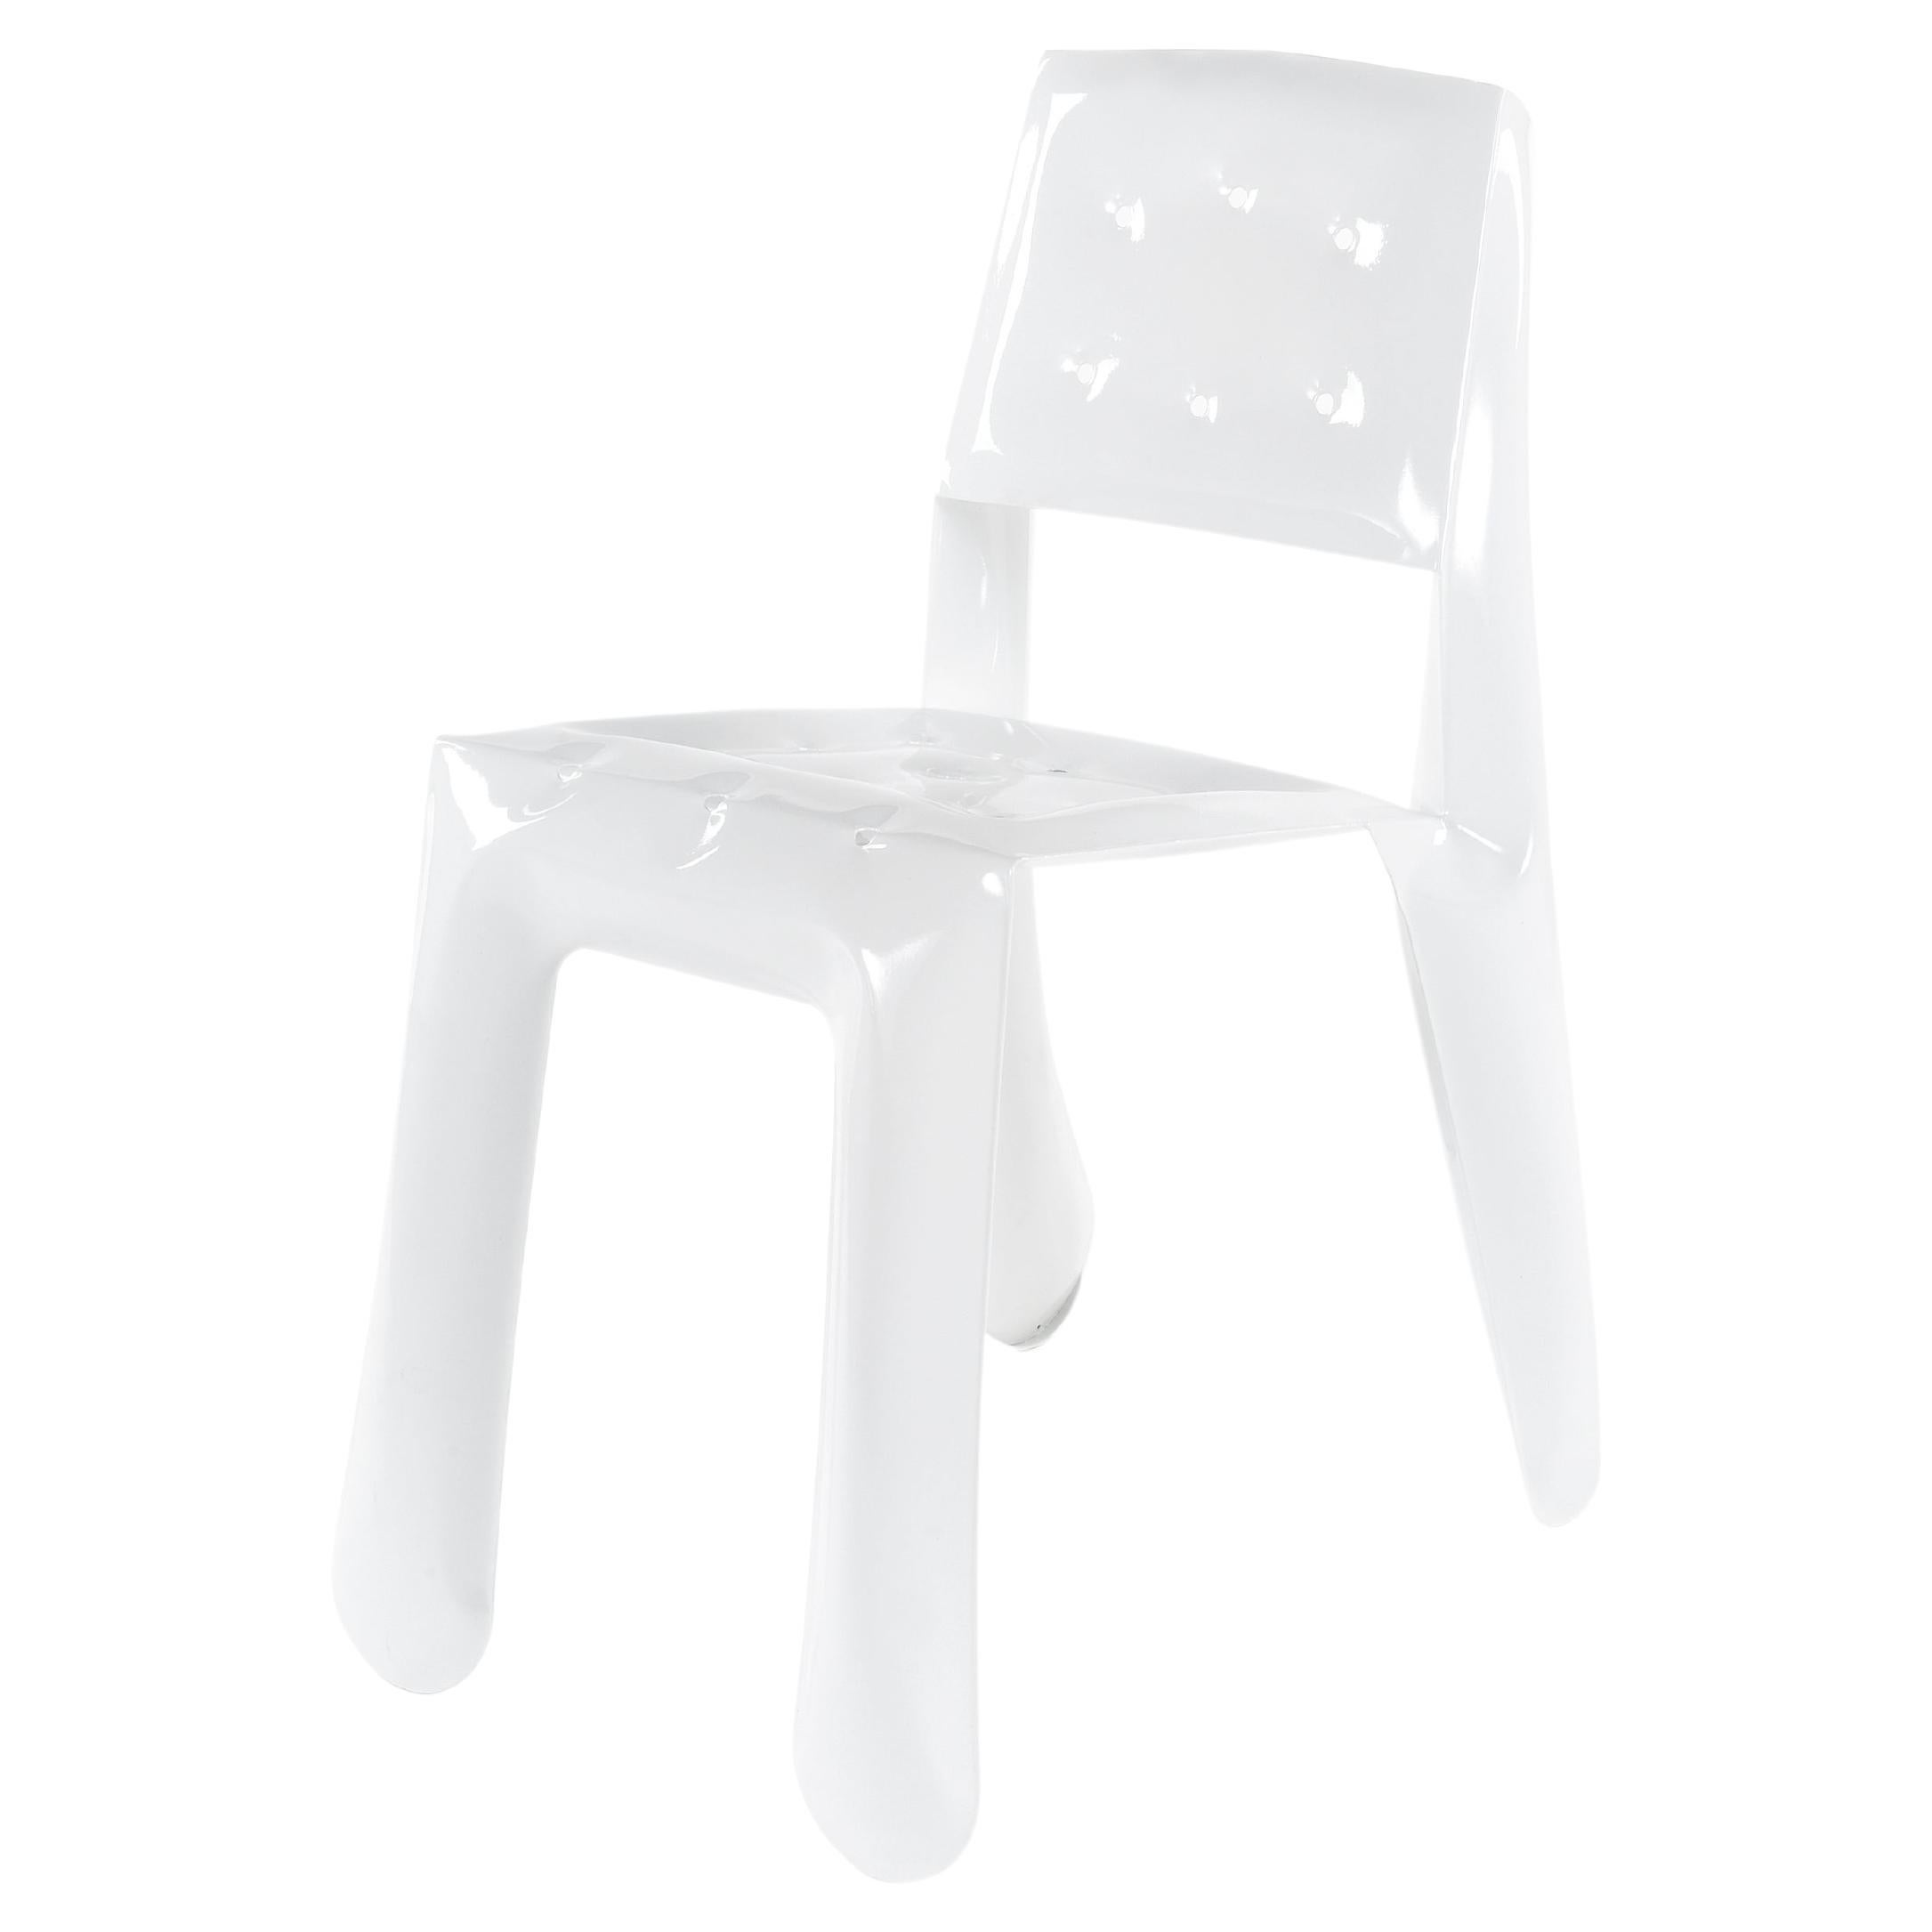 White Carbon Steel Chippensteel 0.5 Sculptural Chair by Zieta For Sale